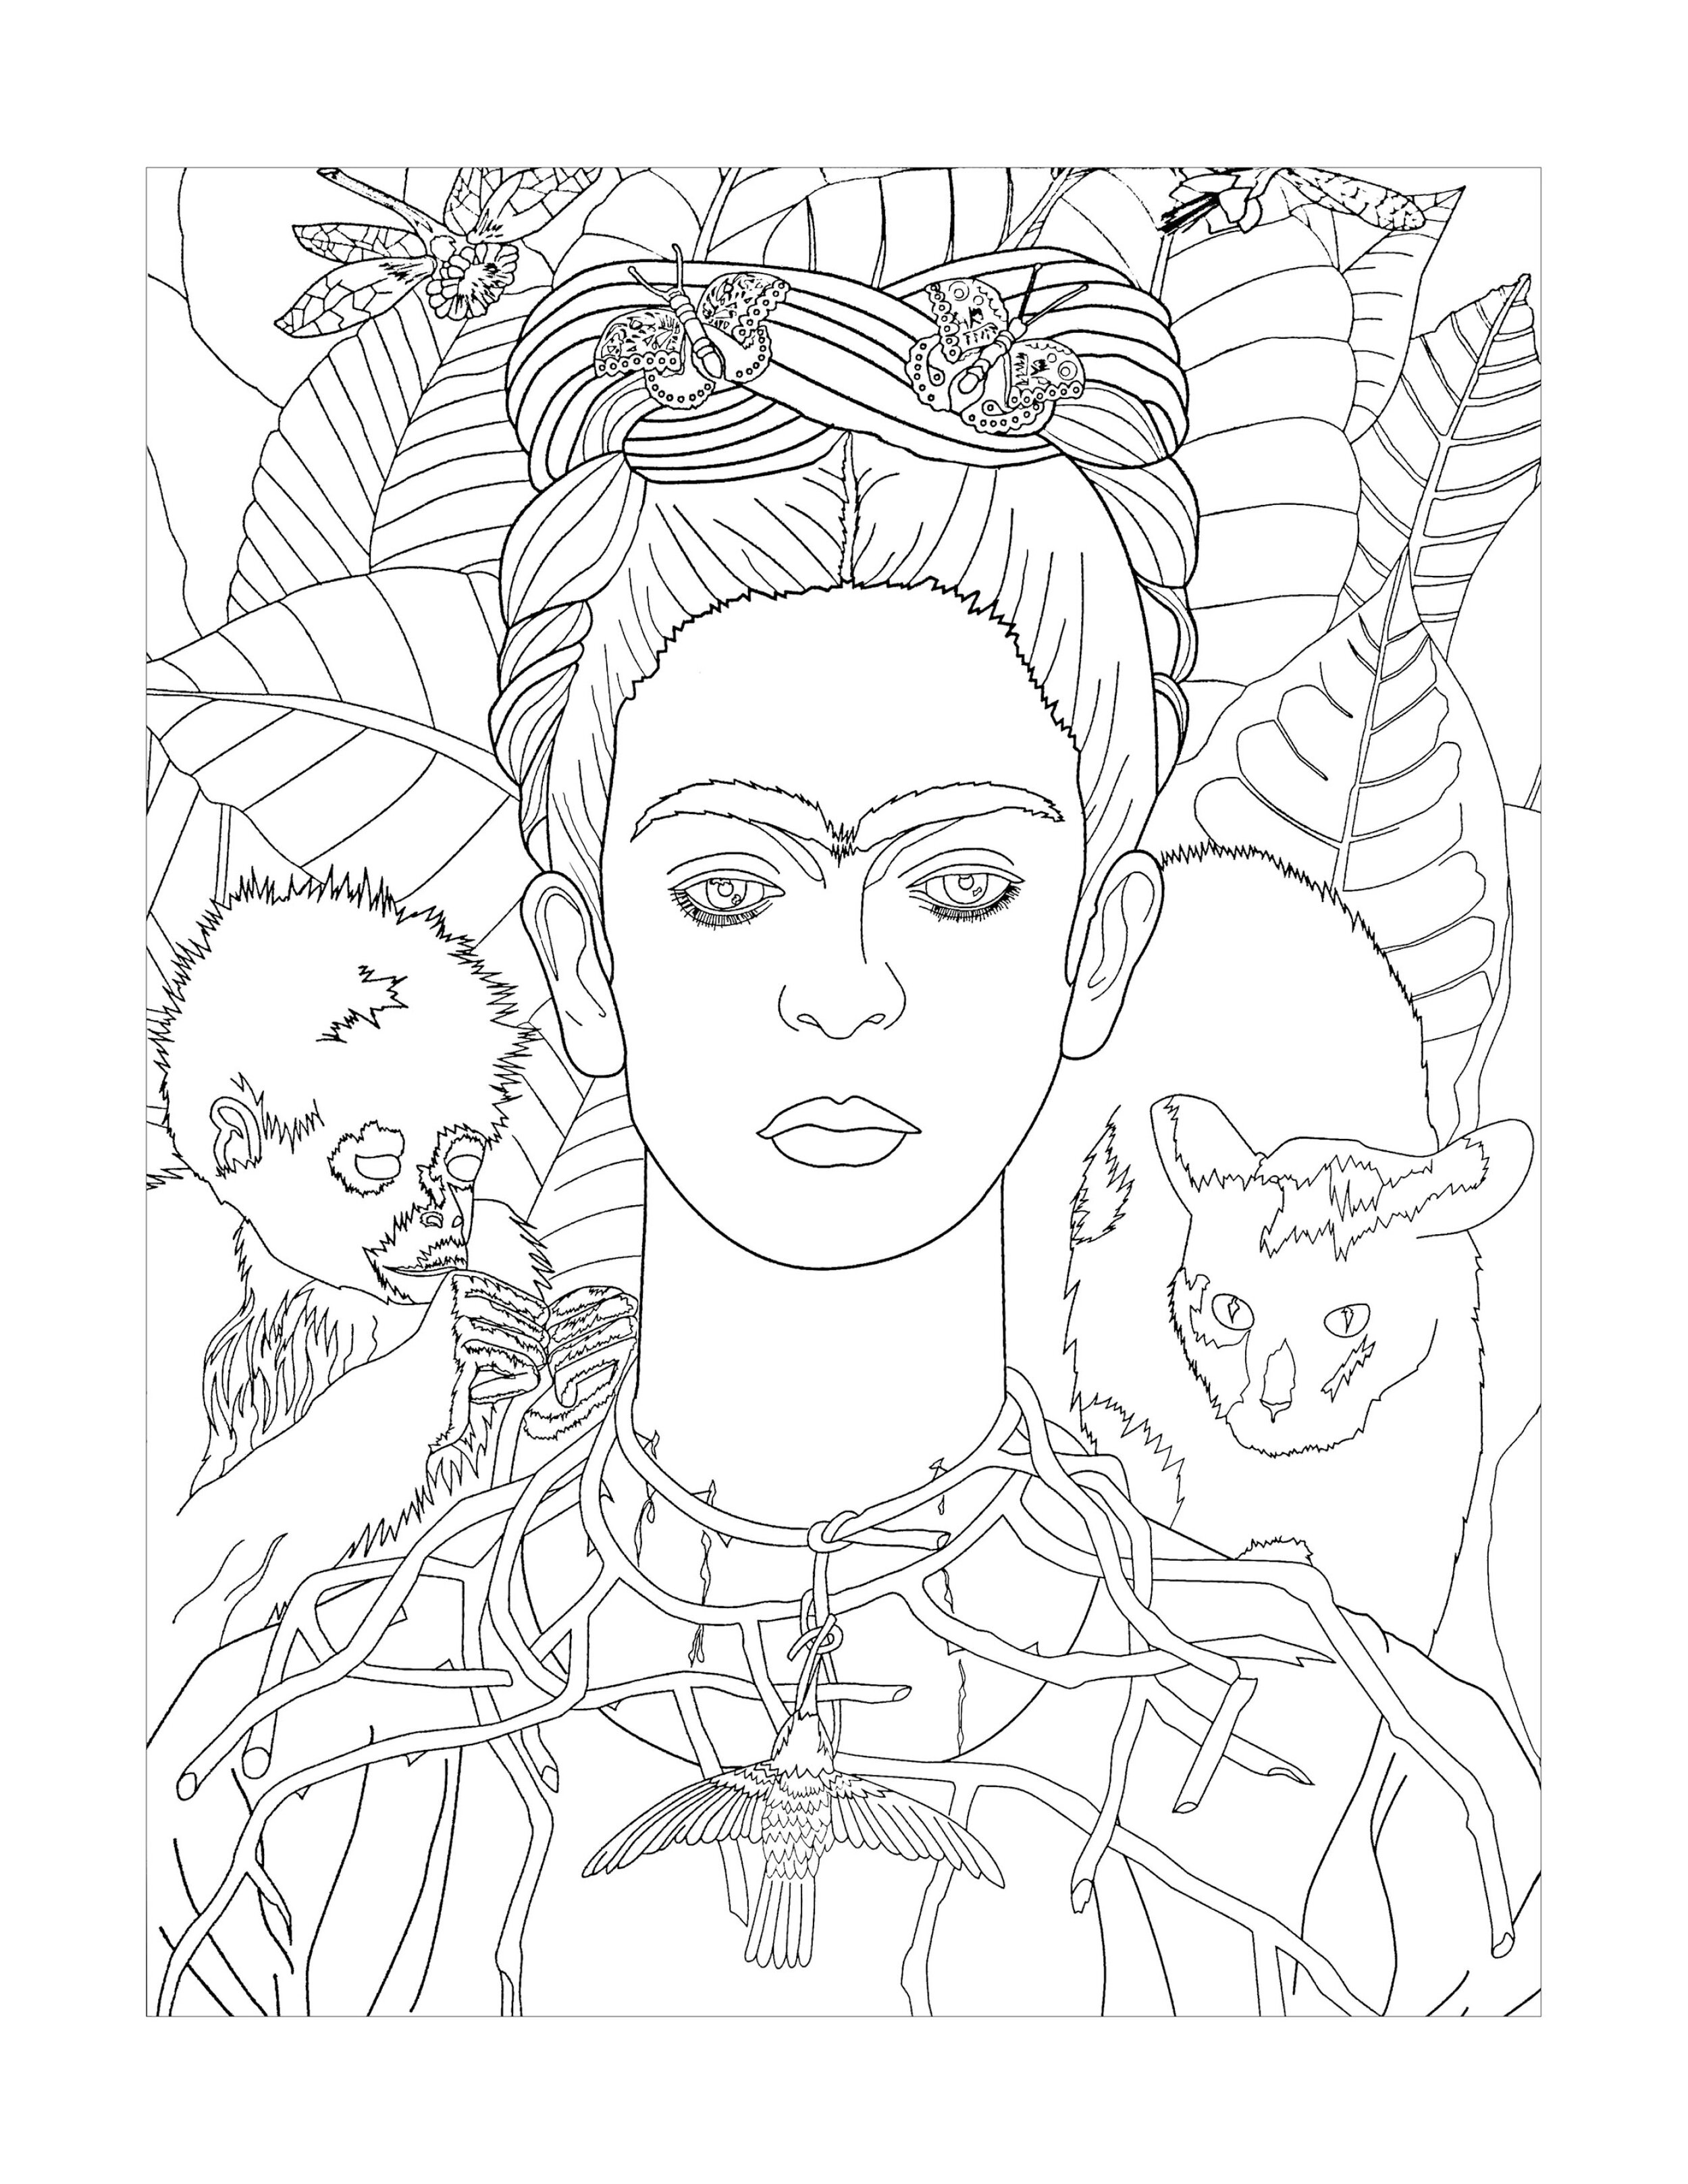 Self Portrait by Frida Kahlo 